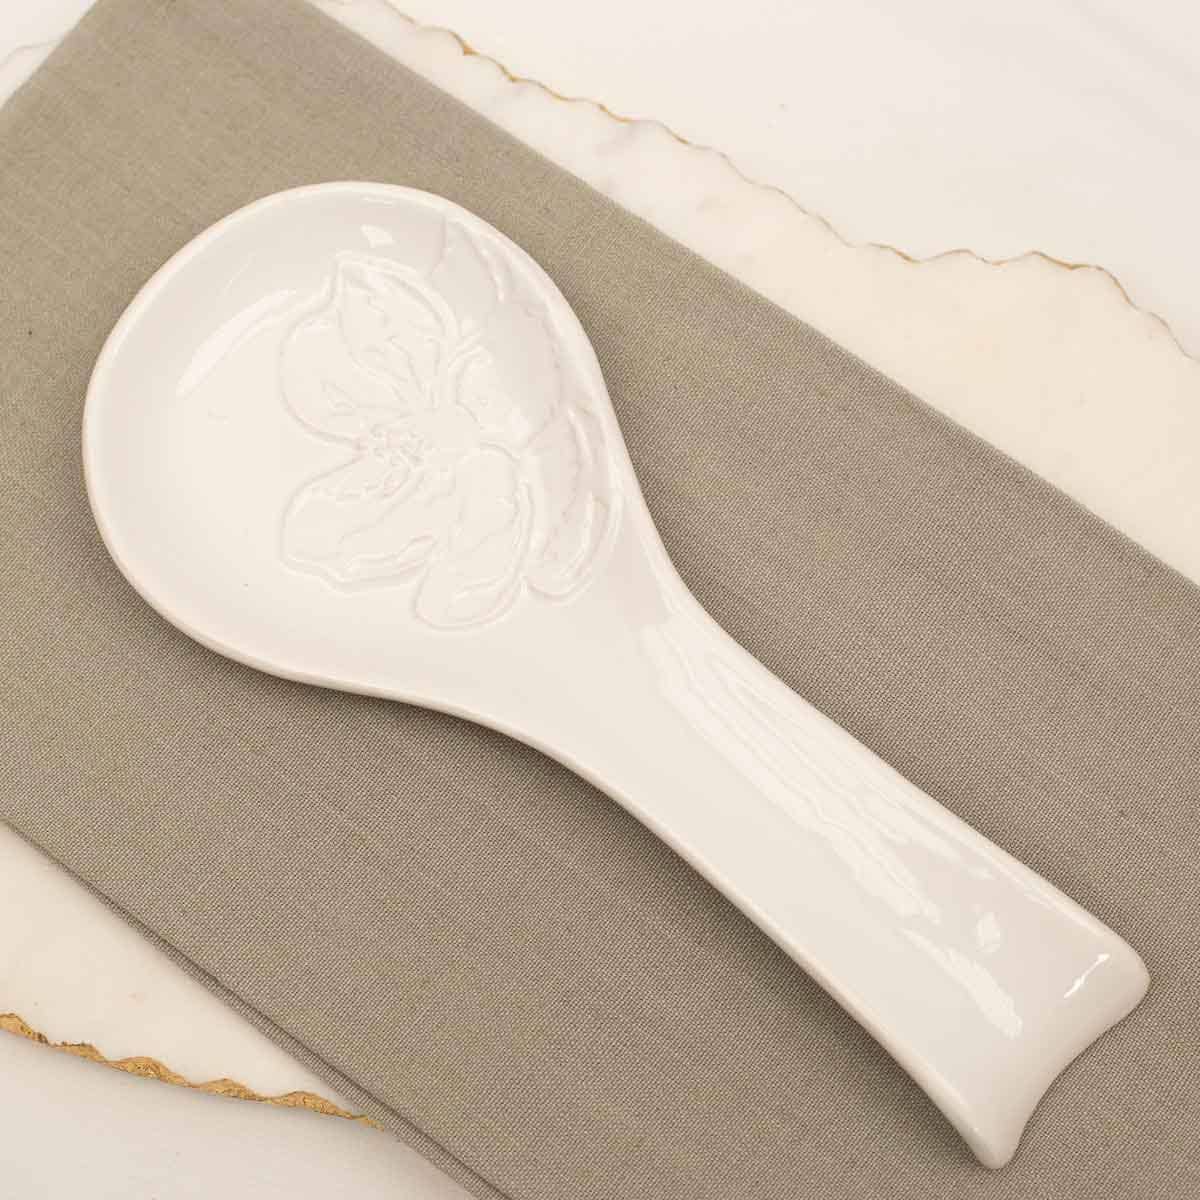 Magnolia Embossed Spoon Rest   White   4x9.5